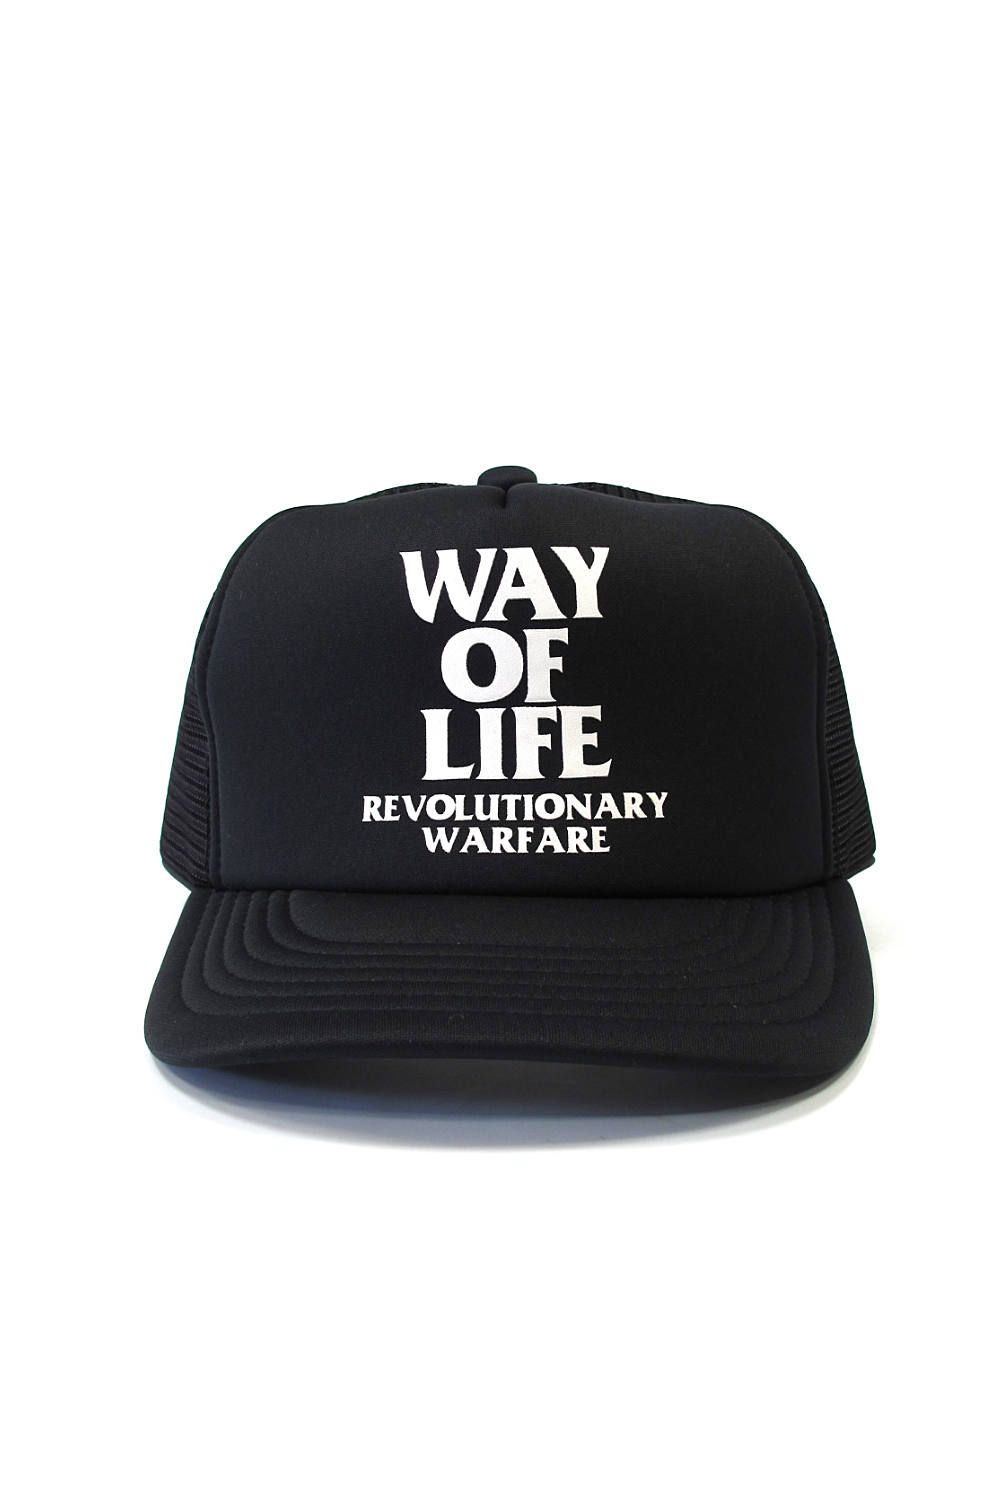 RATS MESH CAP "WAY OF LIFE" 黒　希少 未使用